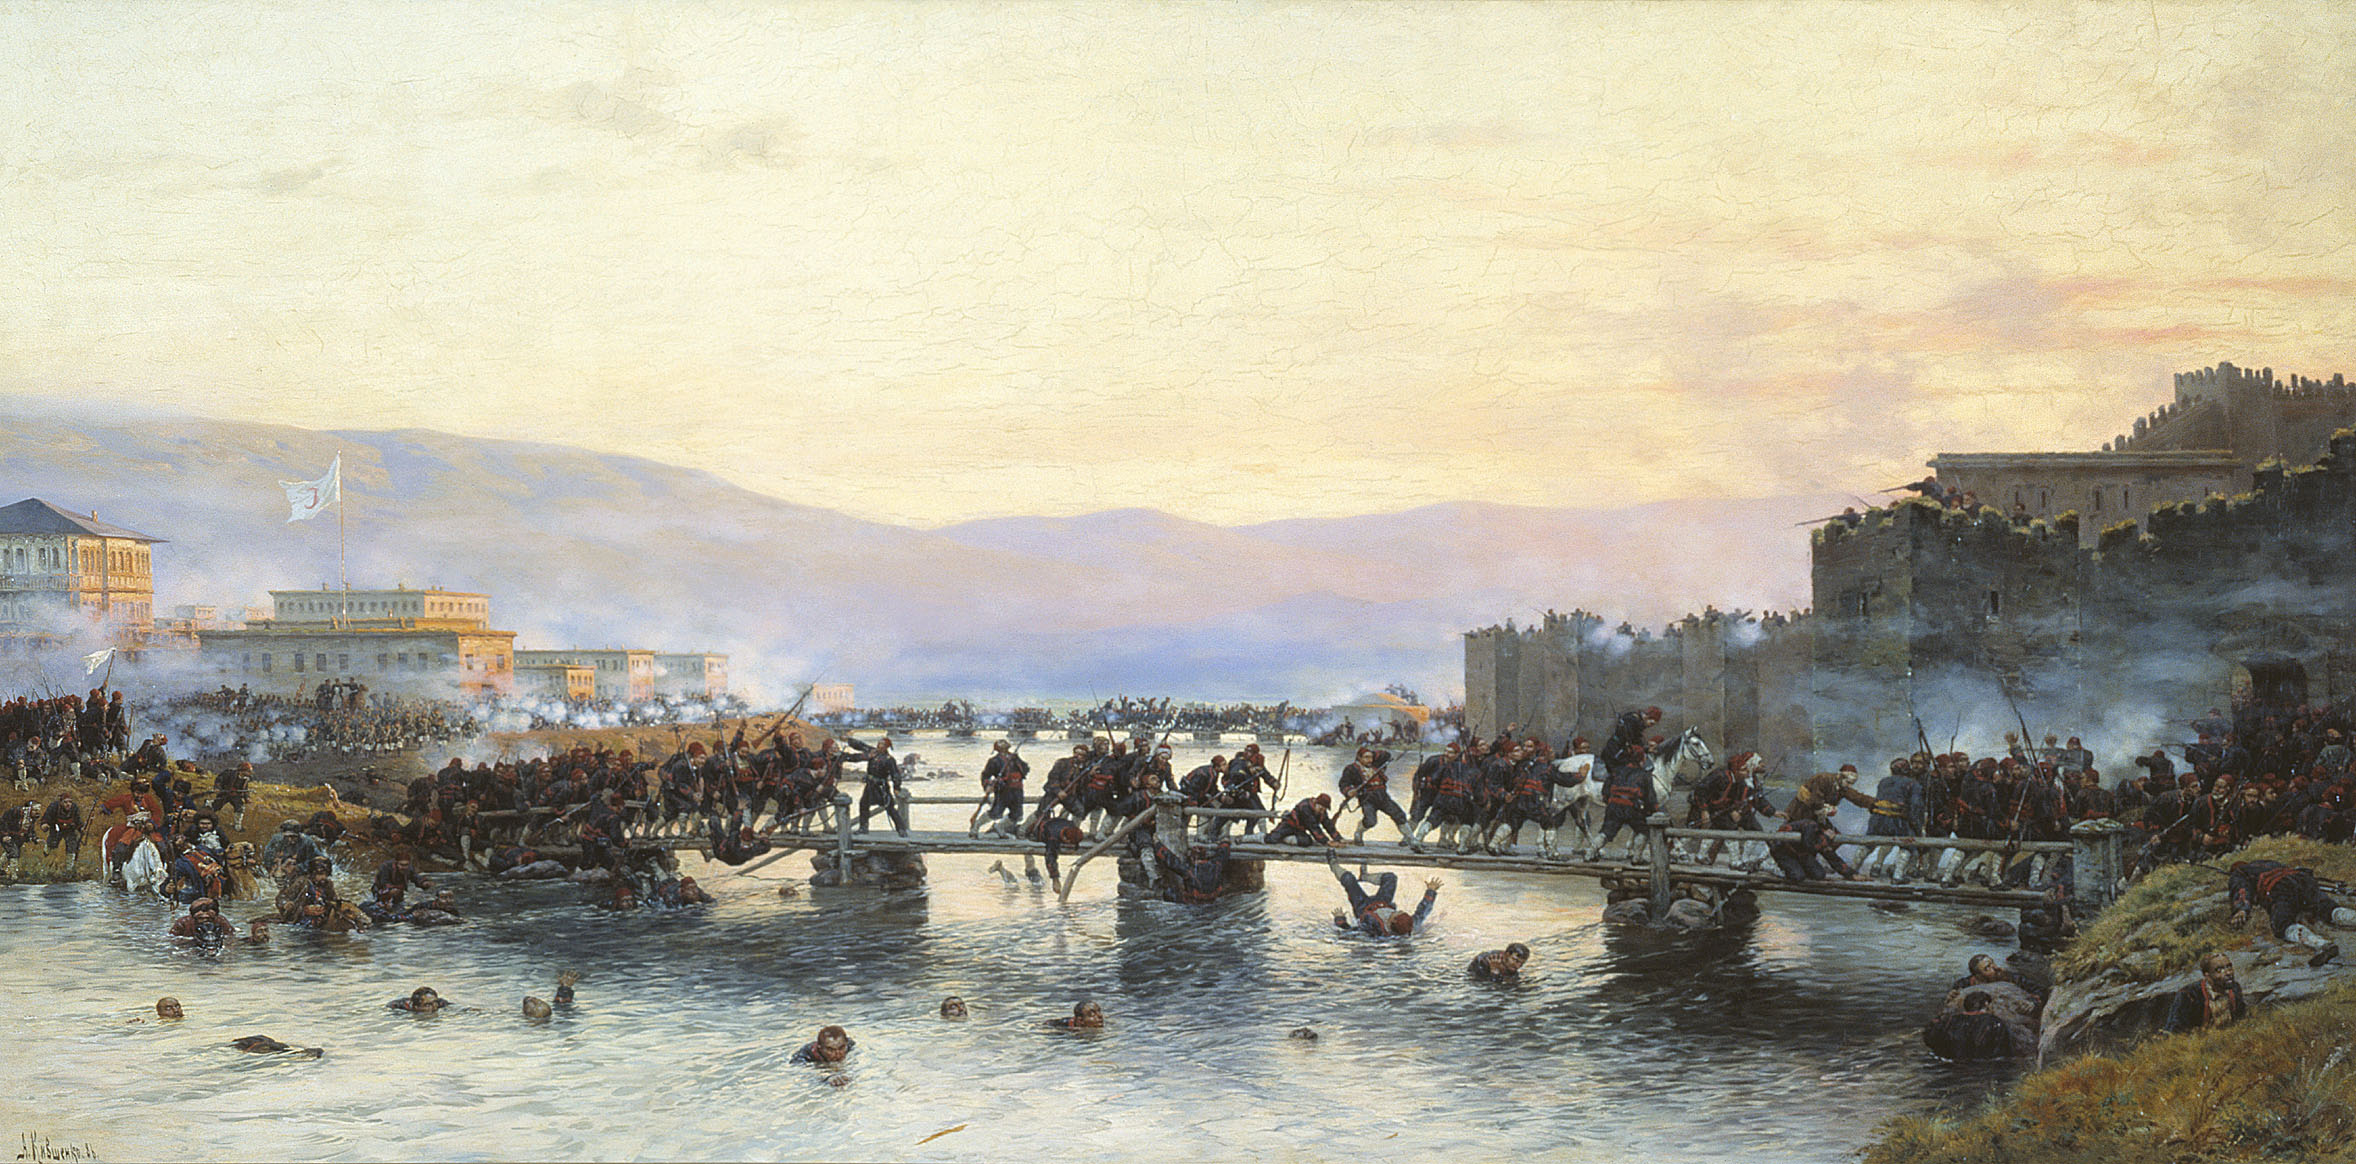 Кившенко. Штурм крепости Ардаган 5 мая 1877 года. 1886